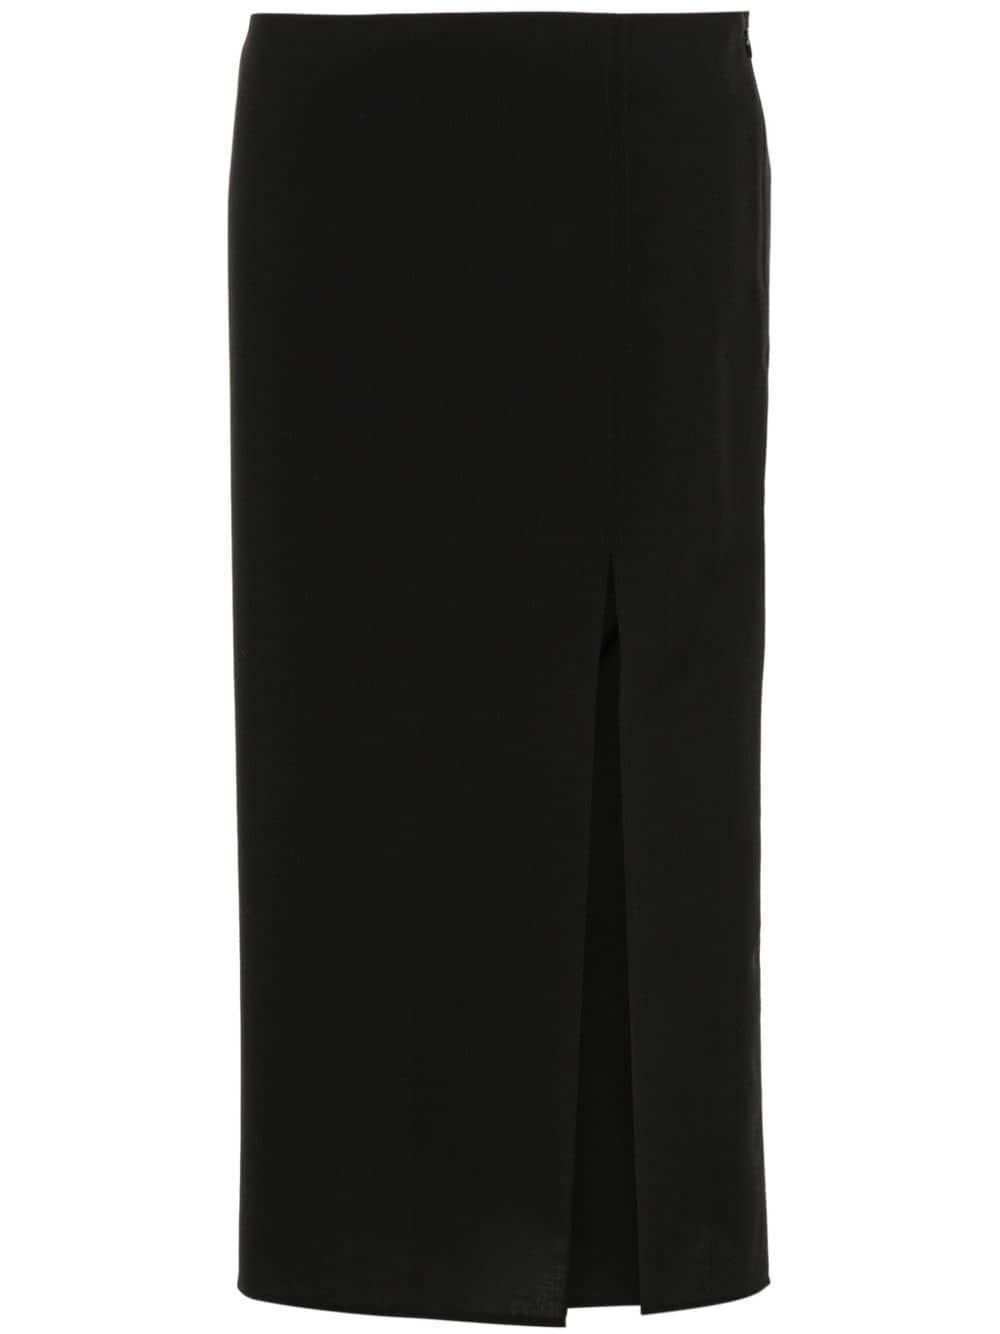 Gauchère side-slit wool skirt